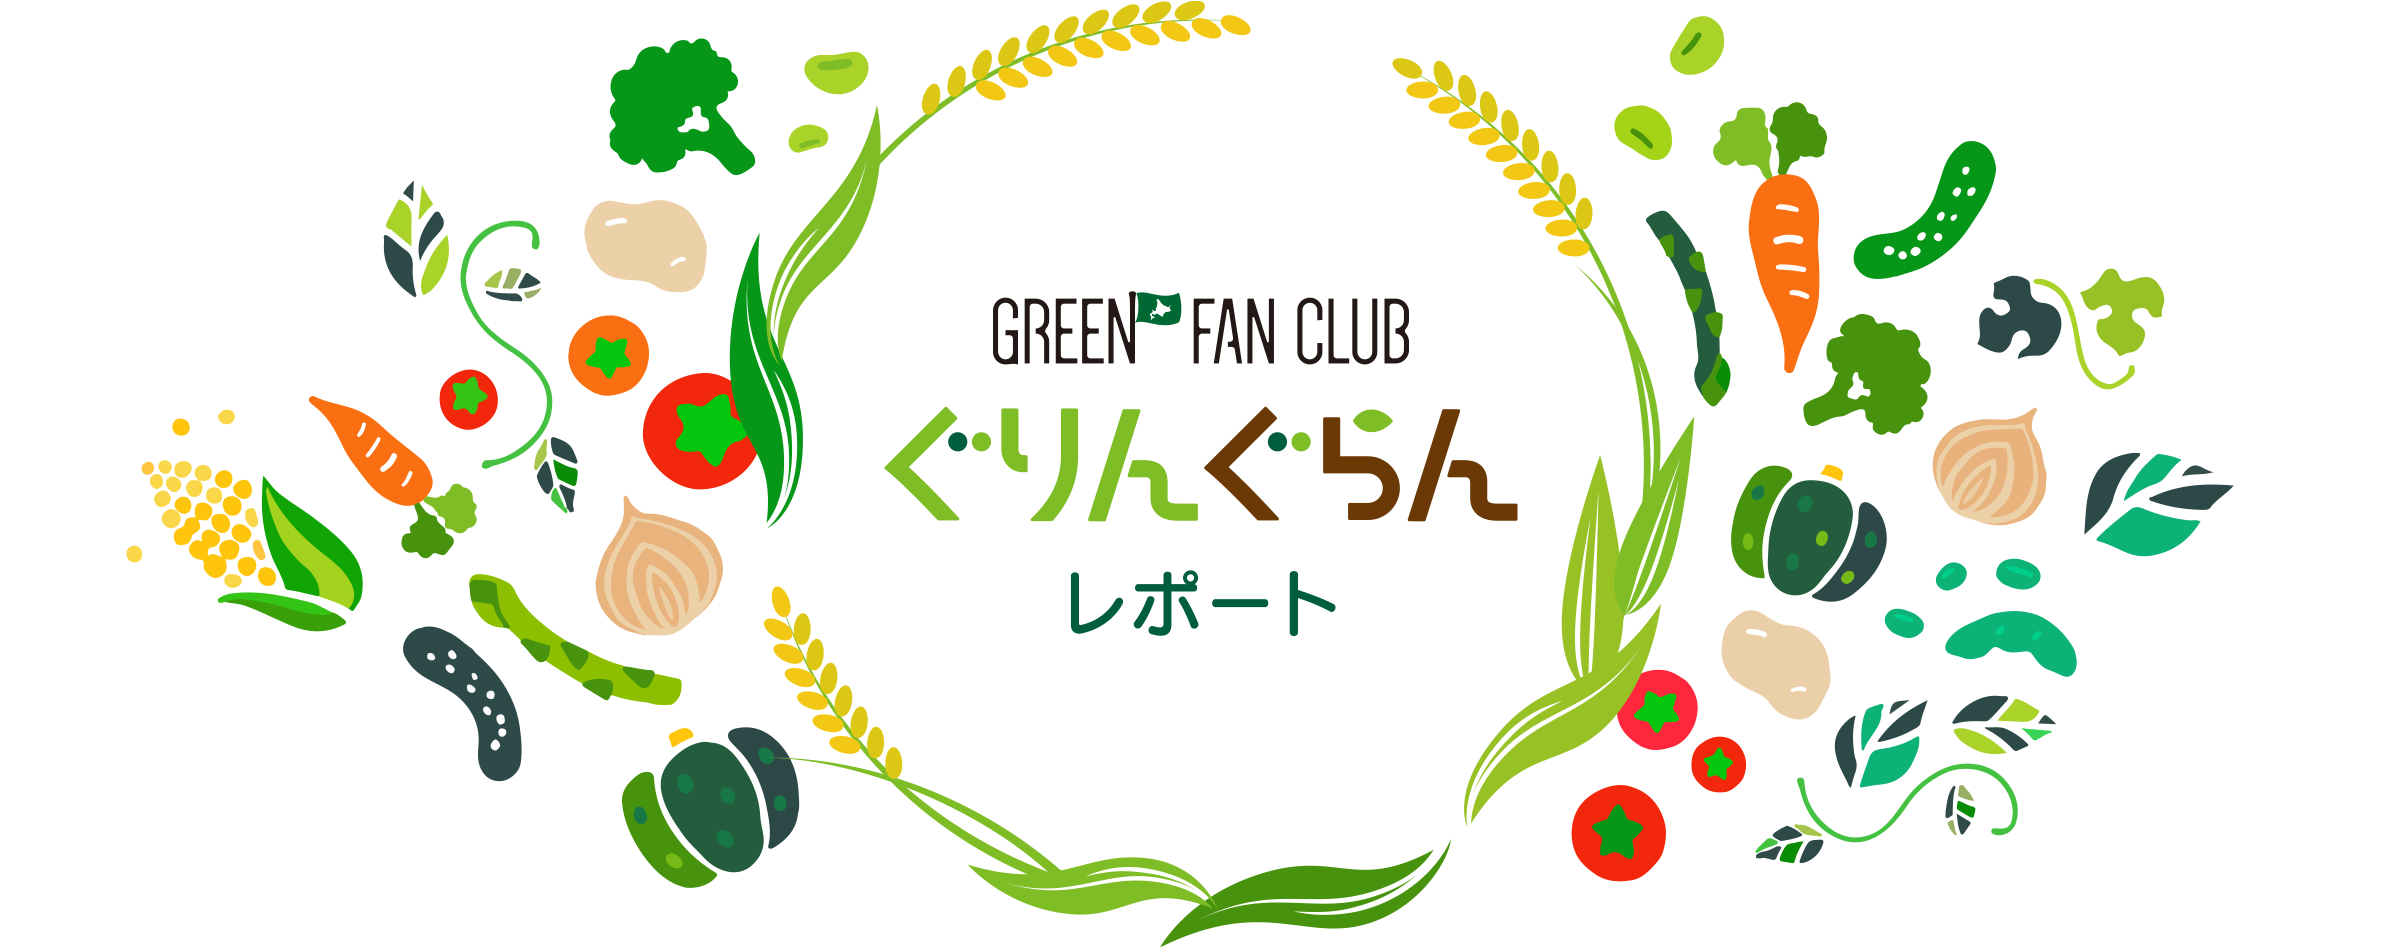 GREEN FAN CLUB ぐりんぐらんレポート